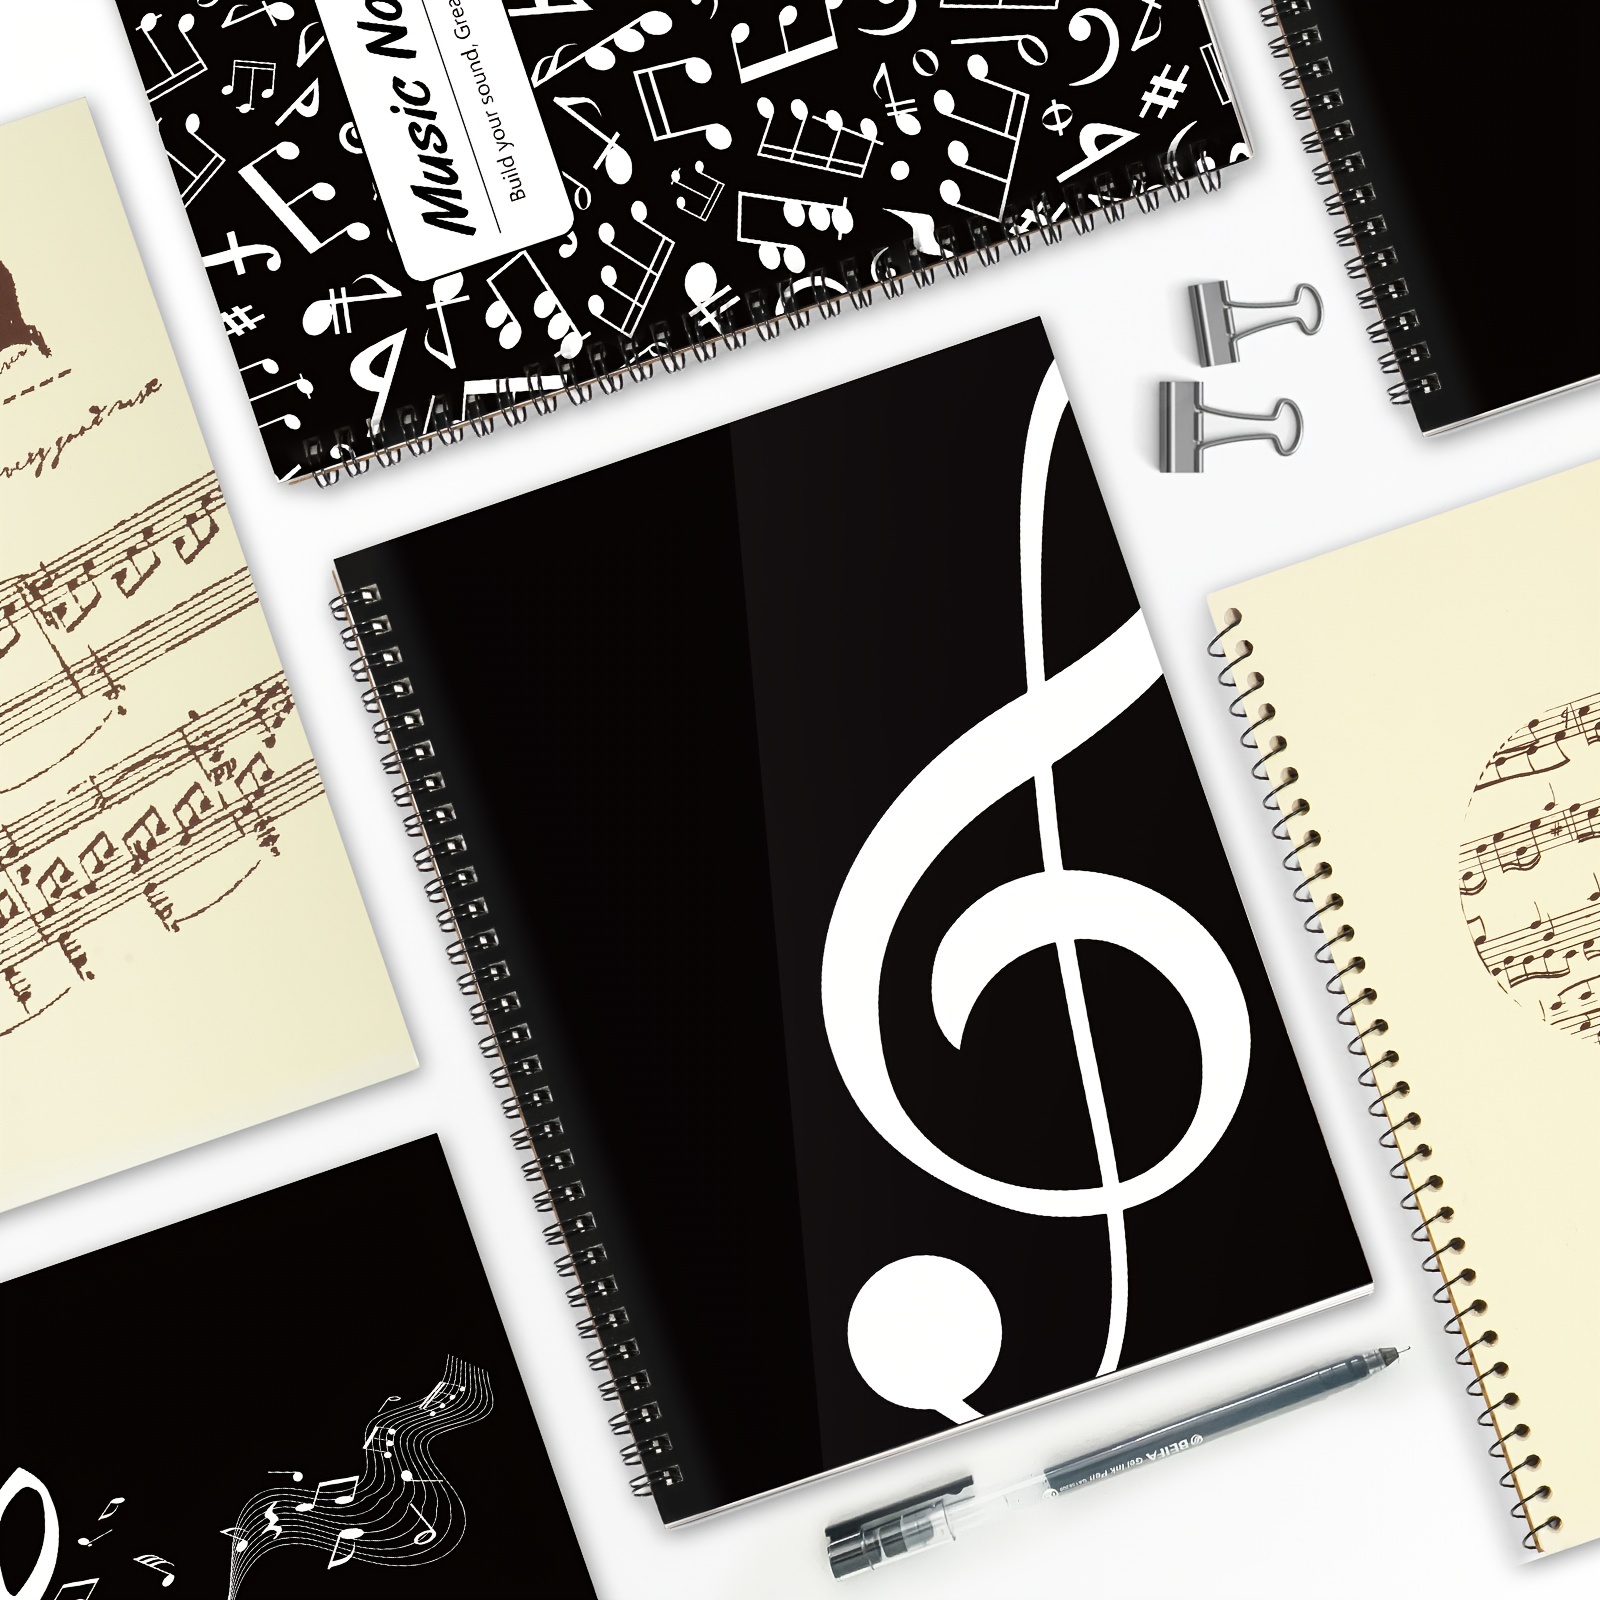 Blank Sheet Music Paper/ Notebook/ Composition 32